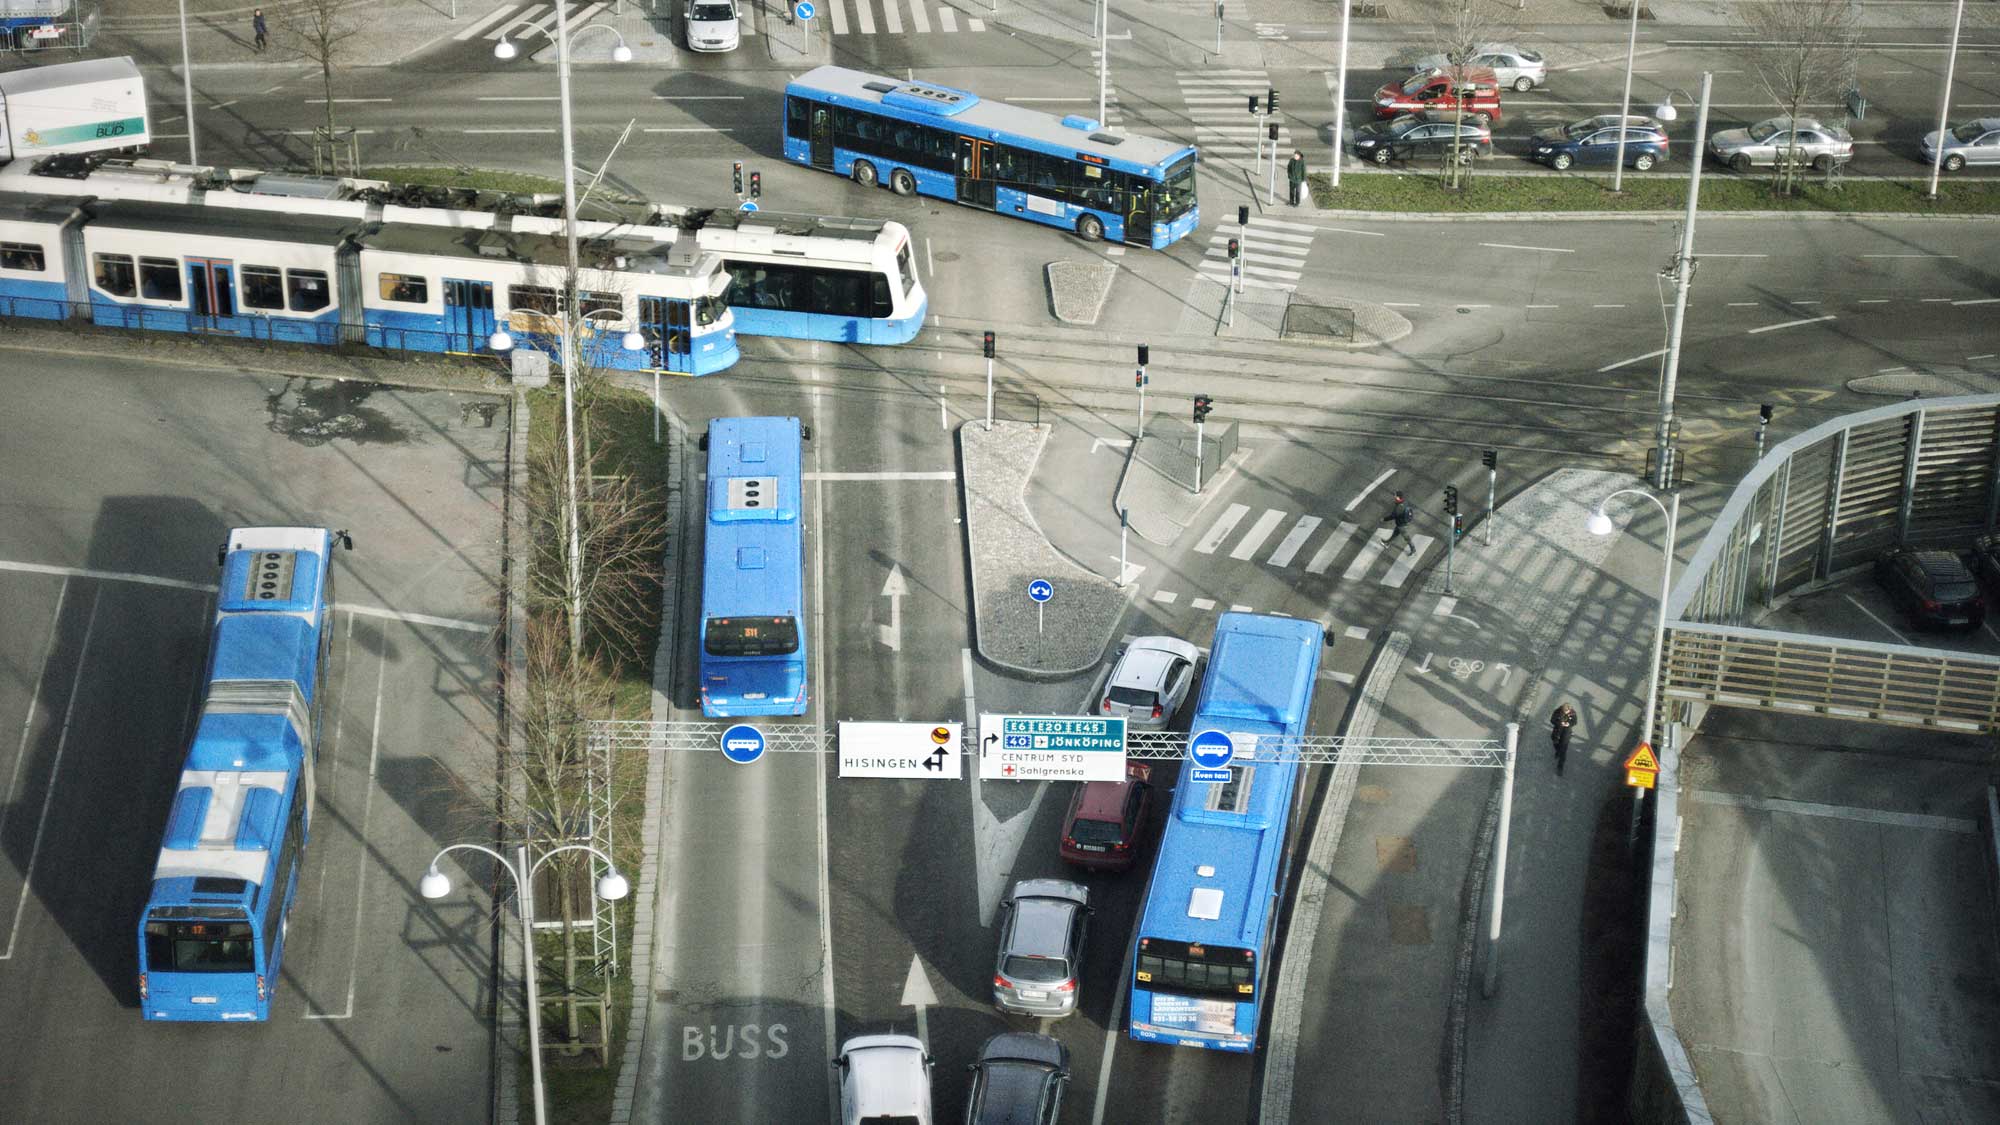 Icomera to Unveil “Next Generation” Passenger WI-FI Technology at Euro Bus